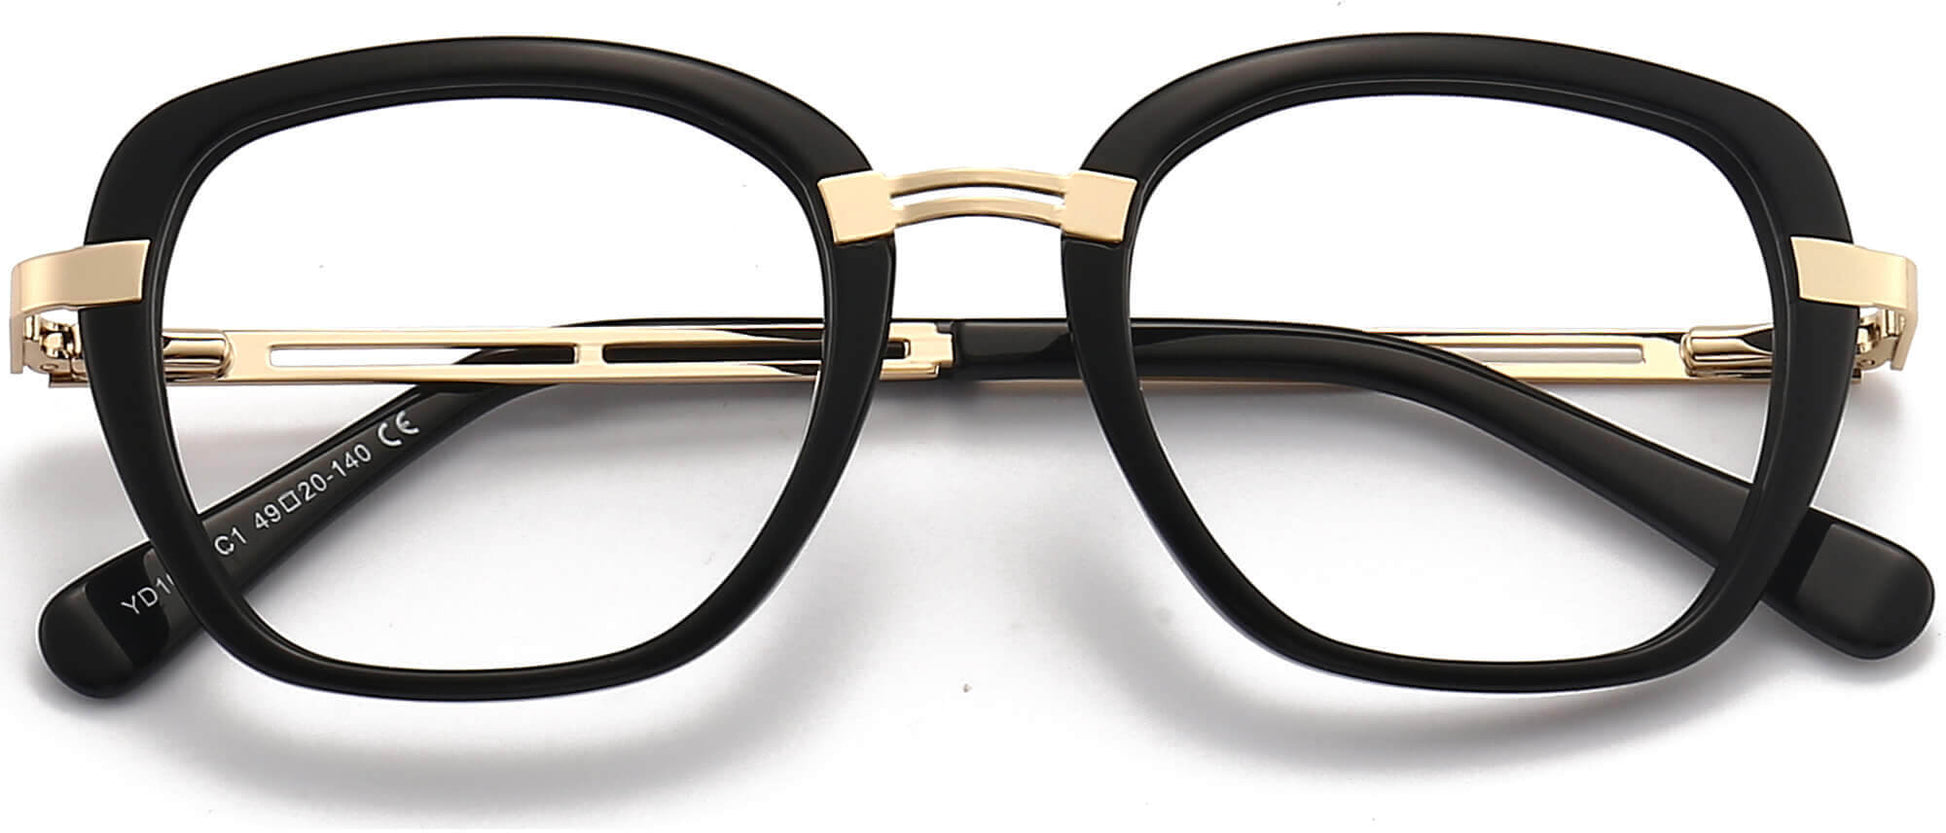 Myla Cateye Black Eyeglasses from ANRRI, closed view